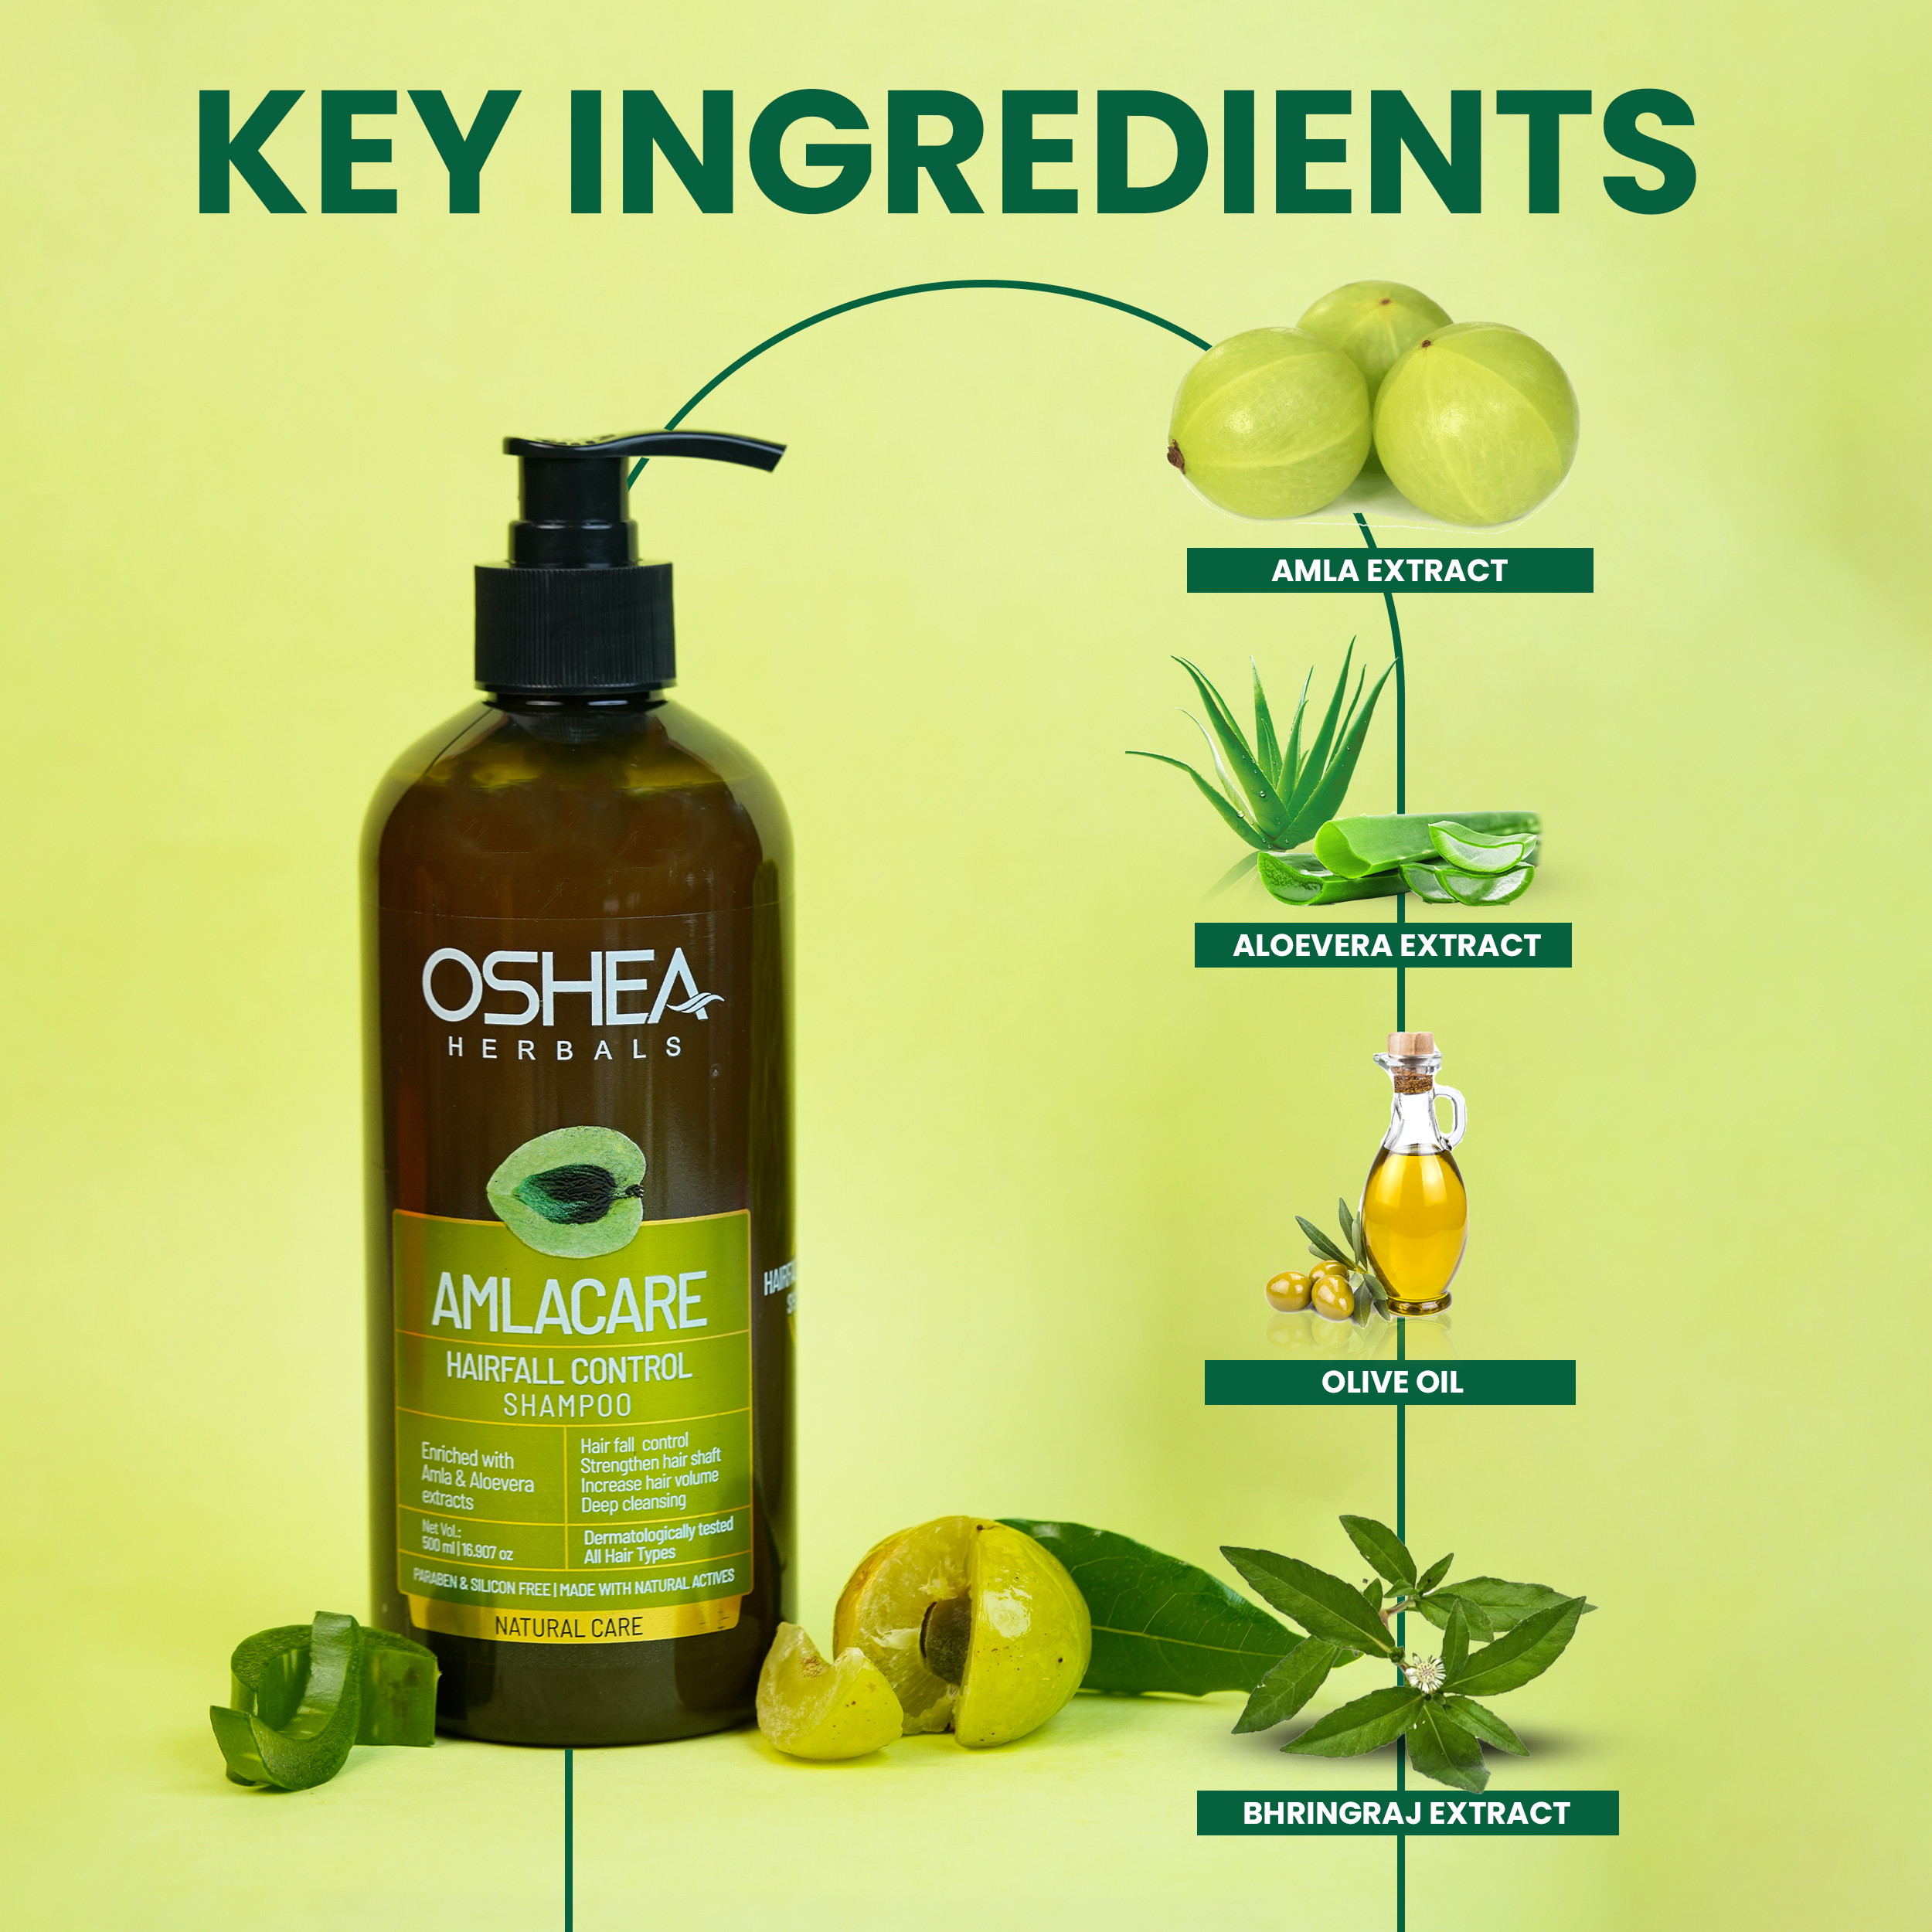 Key Ingredients AmlaCare Hairfall control Shampoo Oshea Herbals